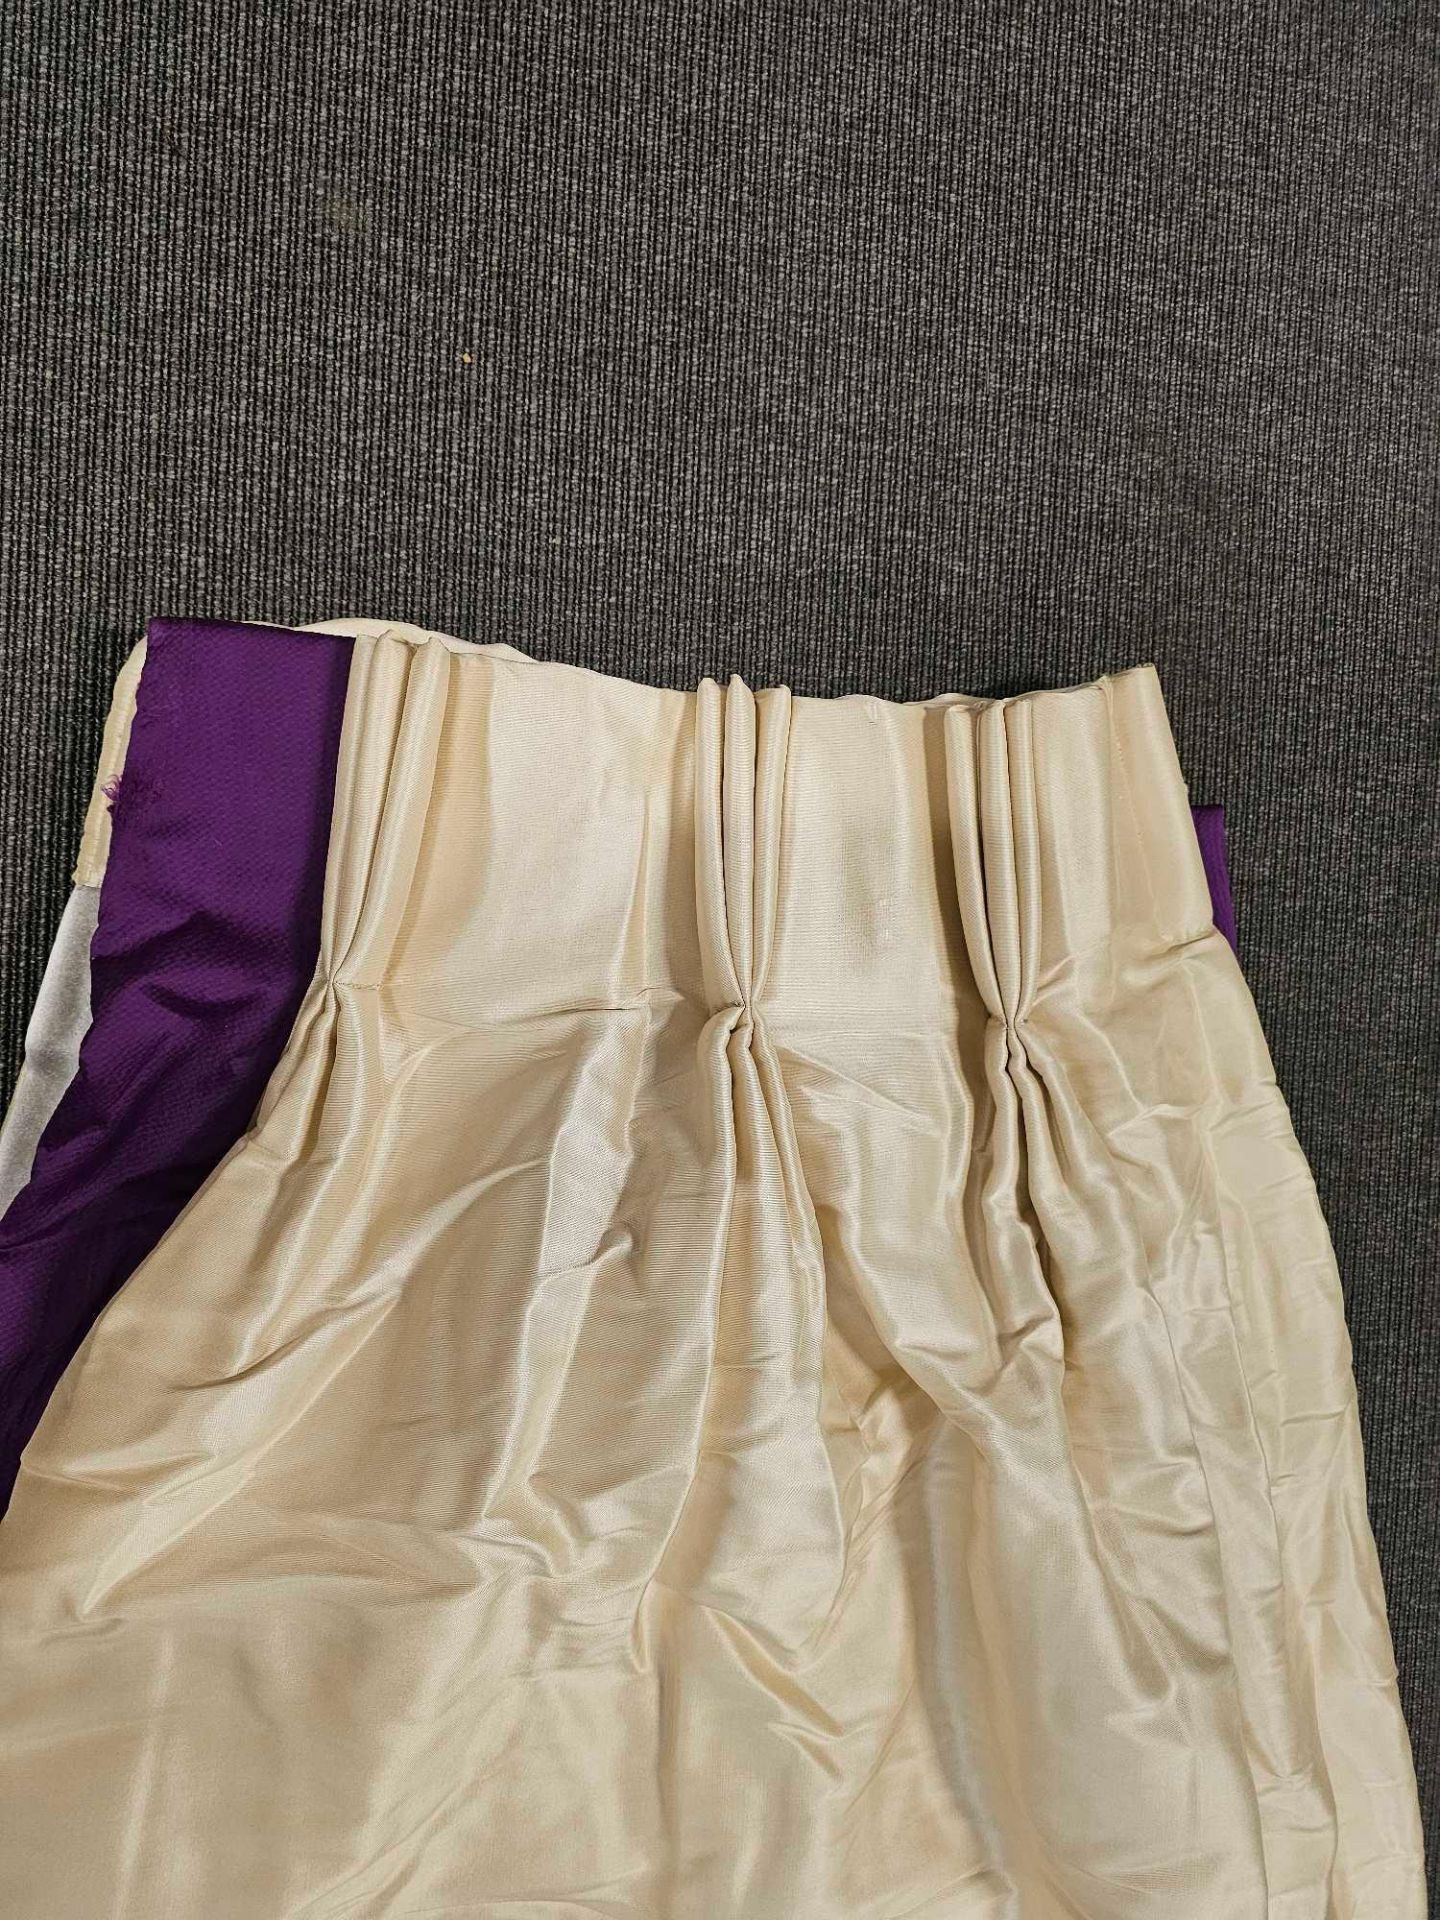 A Pair Of Cream Silk Drapes Purple Striped Edge Tie Backs Purple Pelmet Size -cm 190 x 243 Ref Dorch - Image 3 of 4